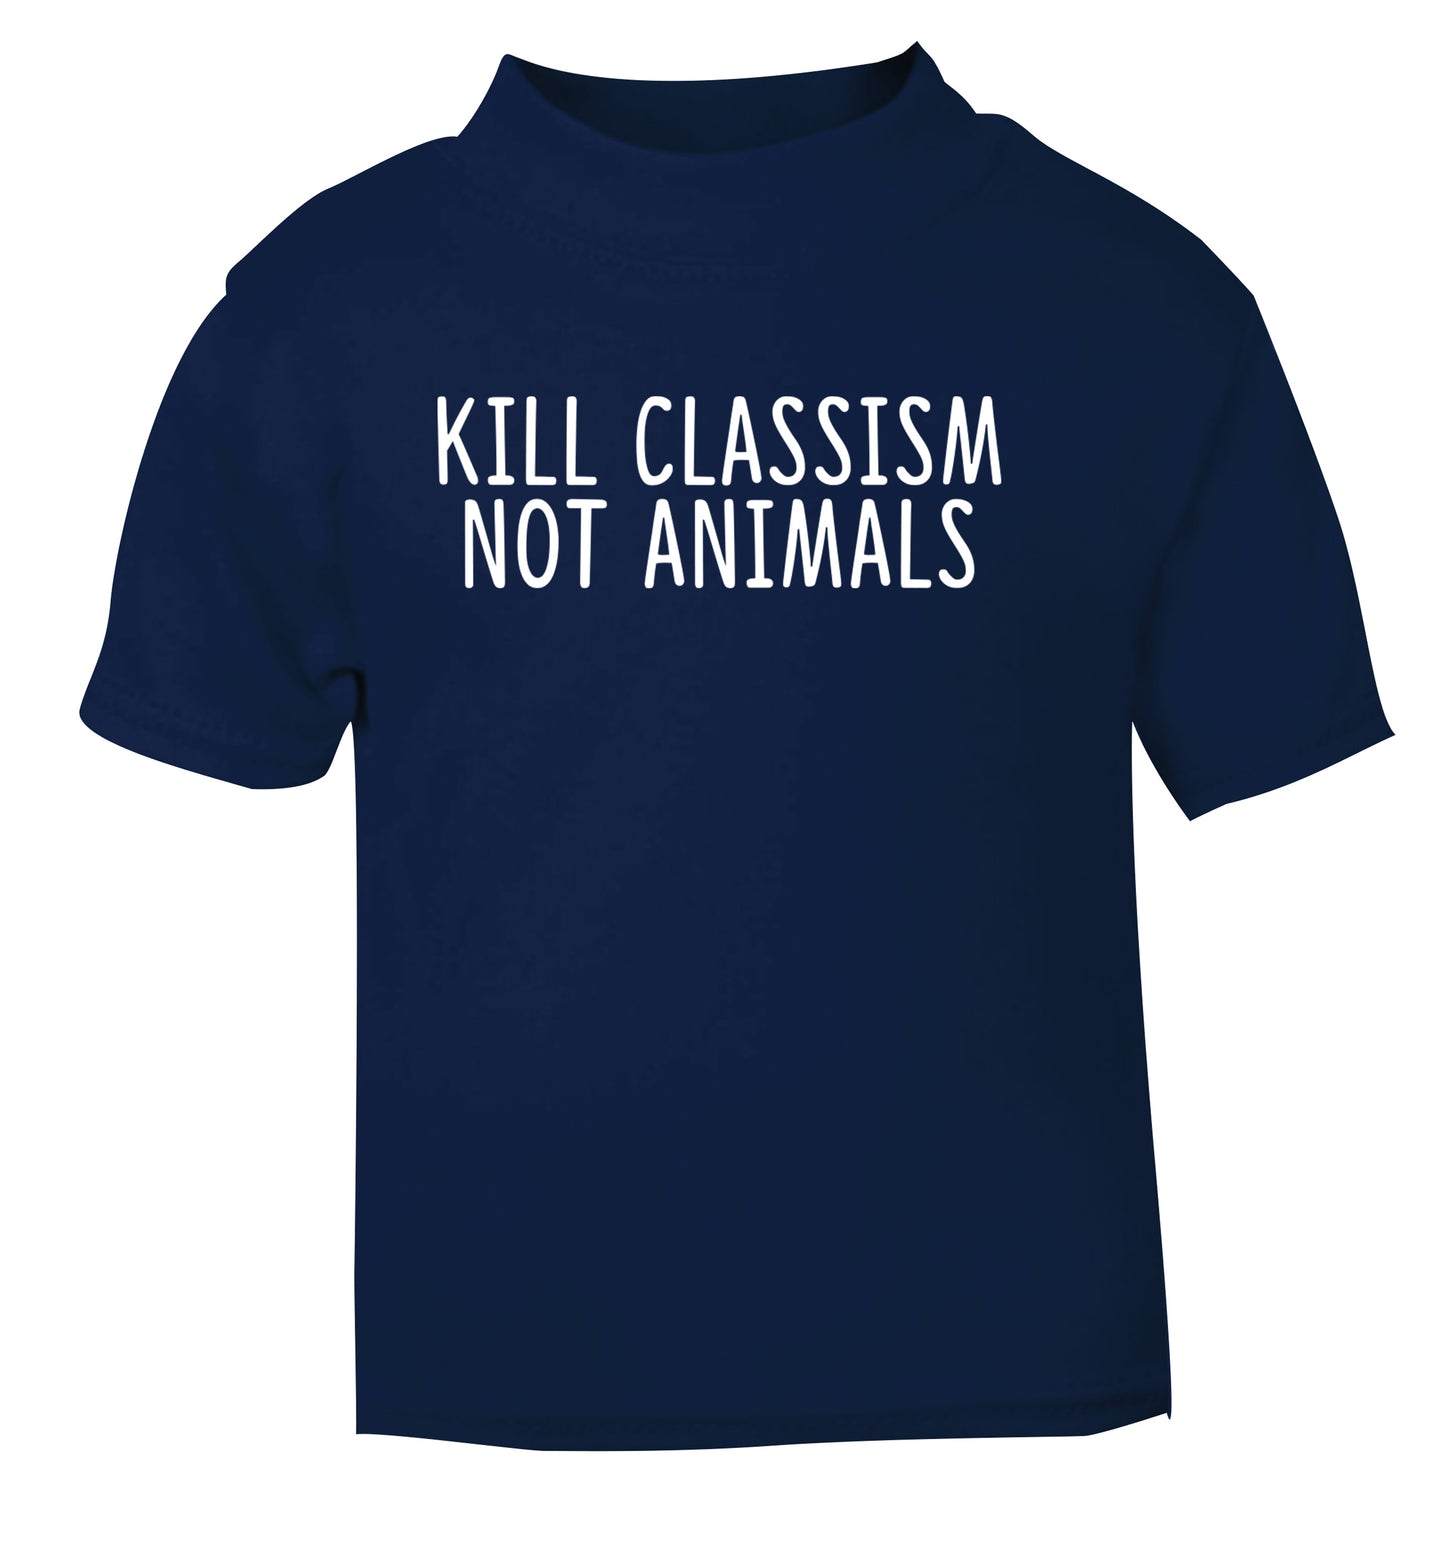 Kill Classism Not Animals navy Baby Toddler Tshirt 2 Years